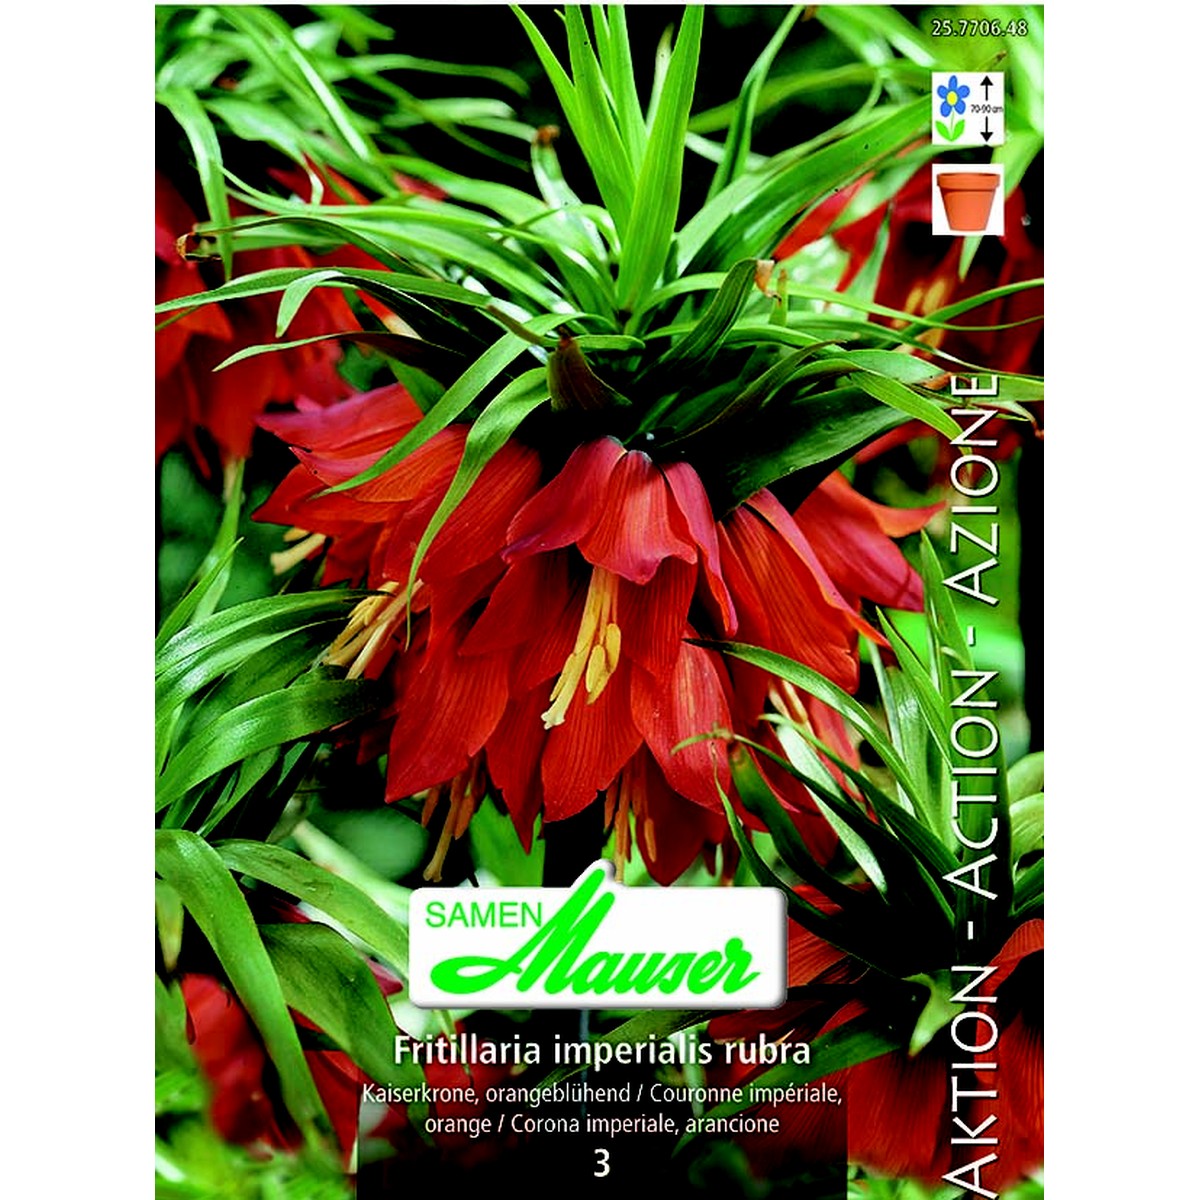   Fritillaria imp Rubra maxima 3  20/24